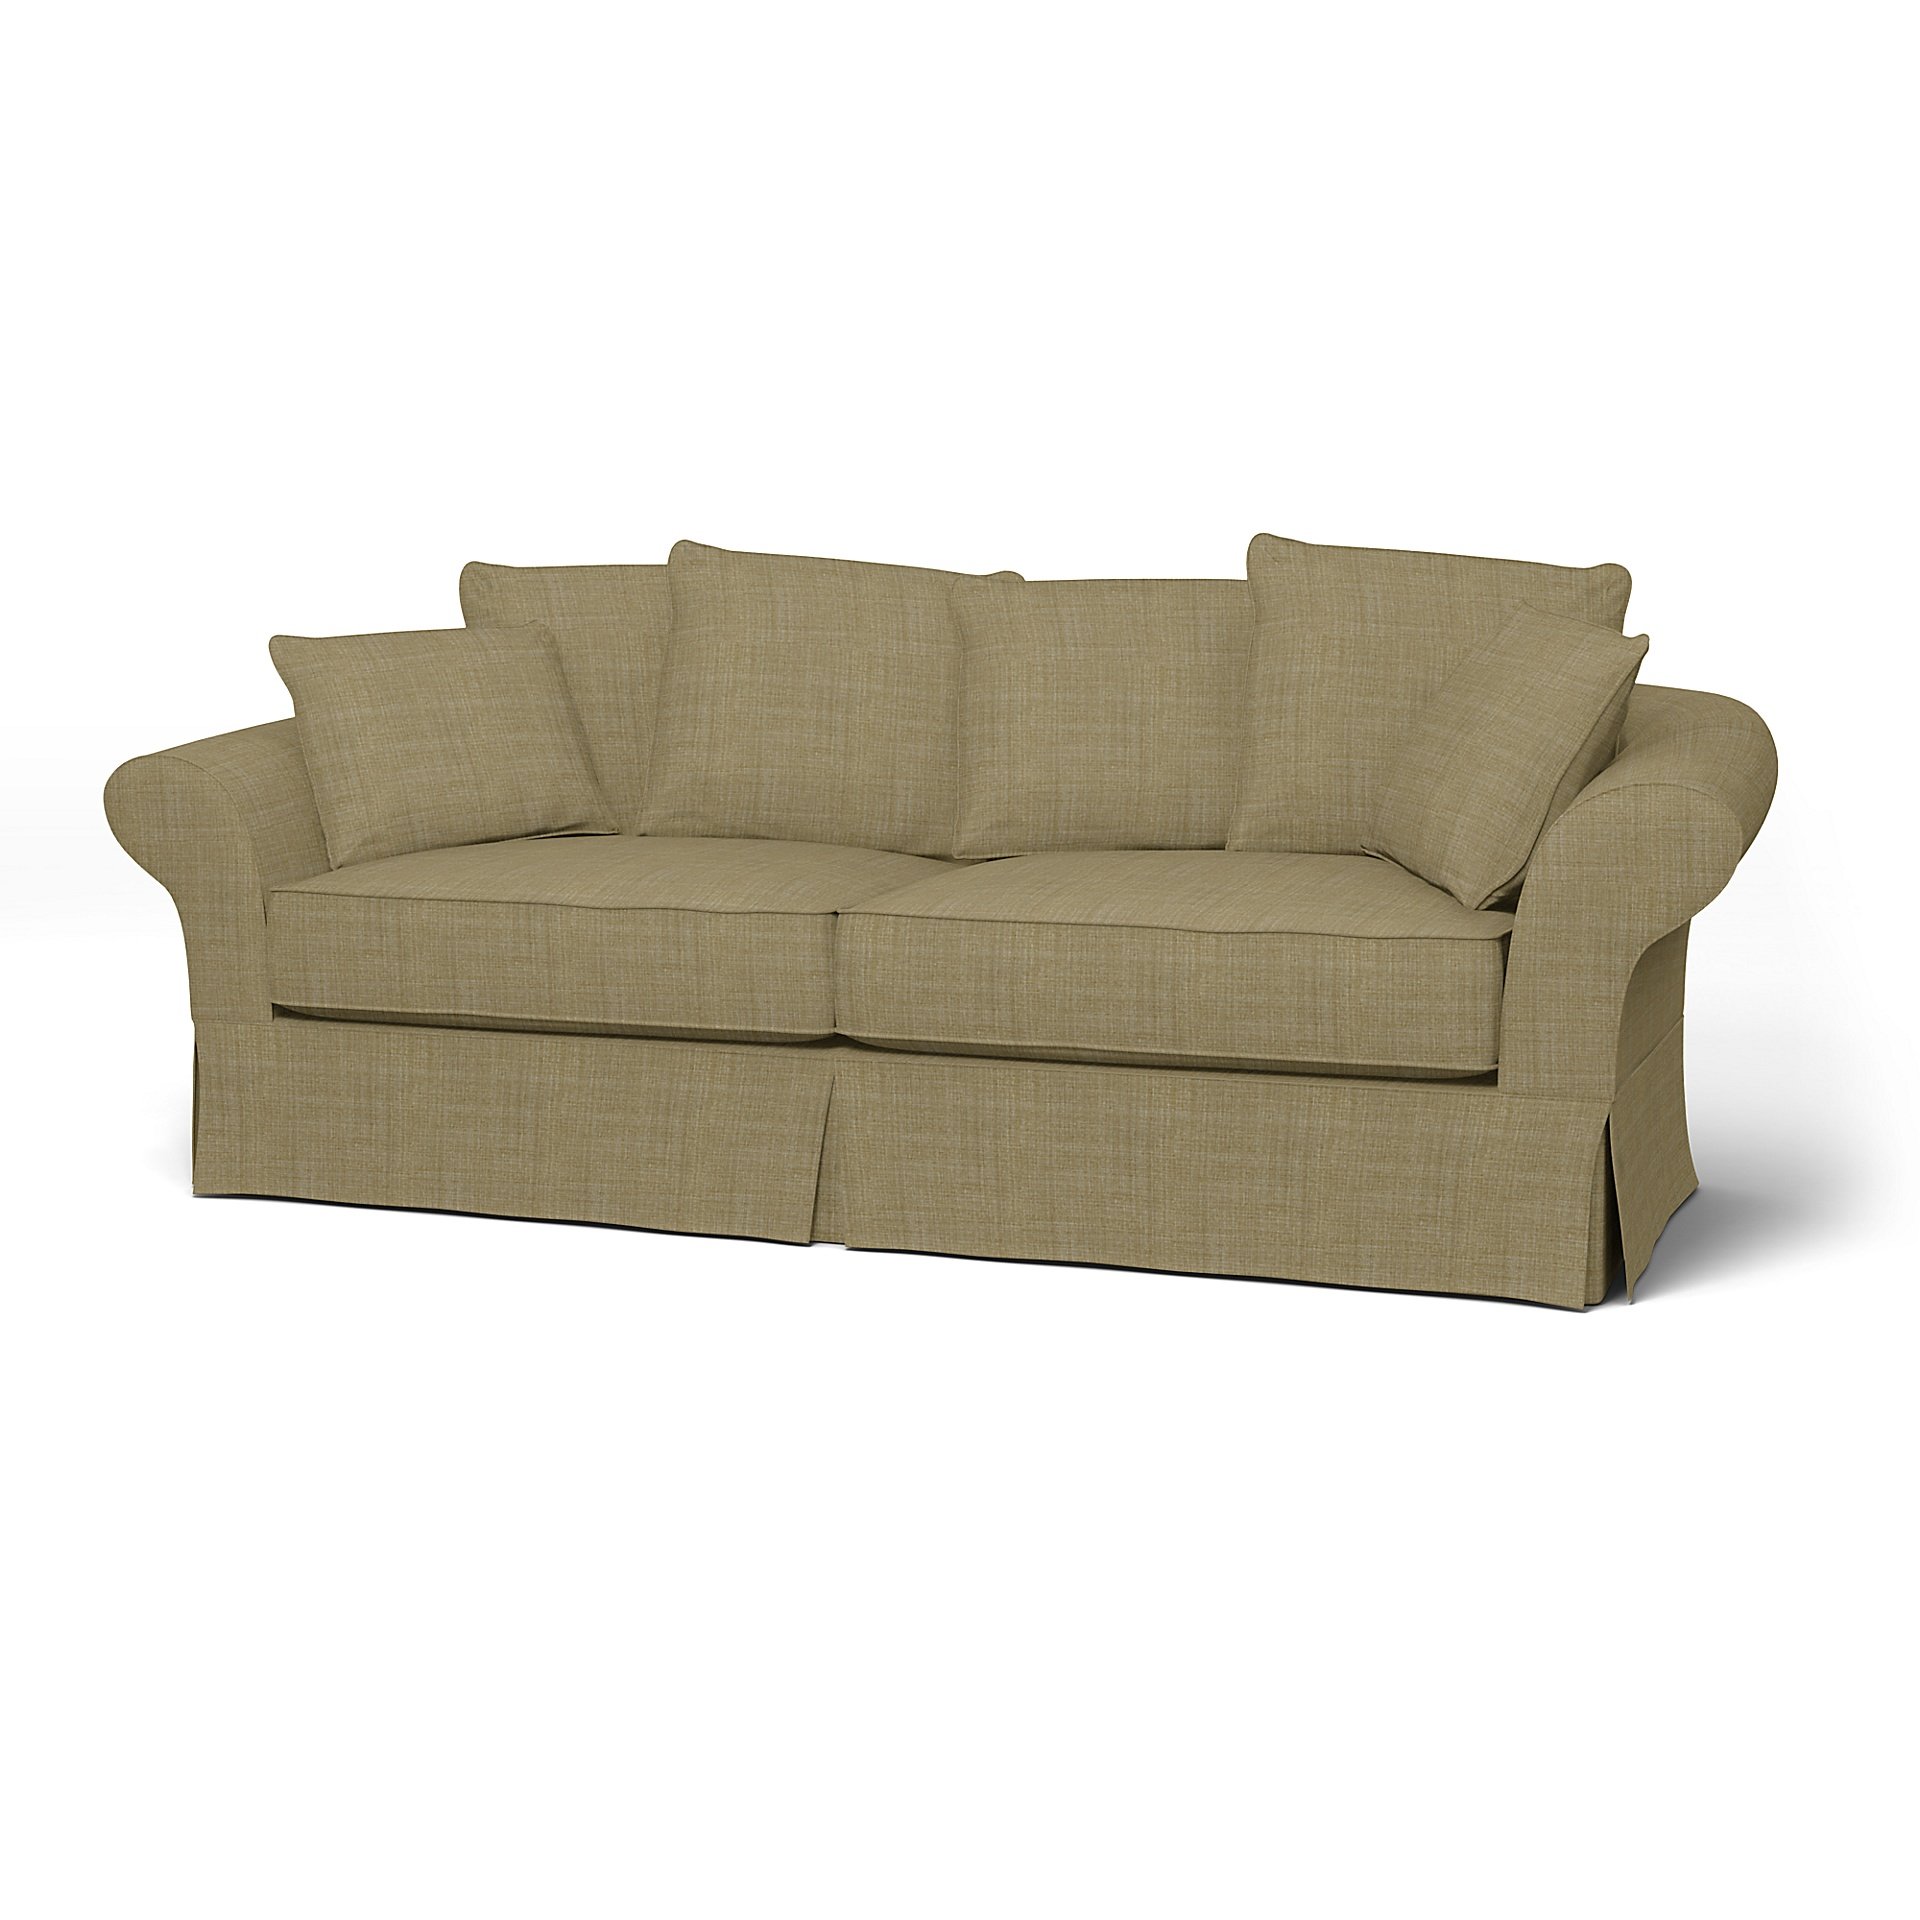 IKEA - Backamo 3 Seater Sofa Cover, Dusty Yellow, Boucle & Texture - Bemz